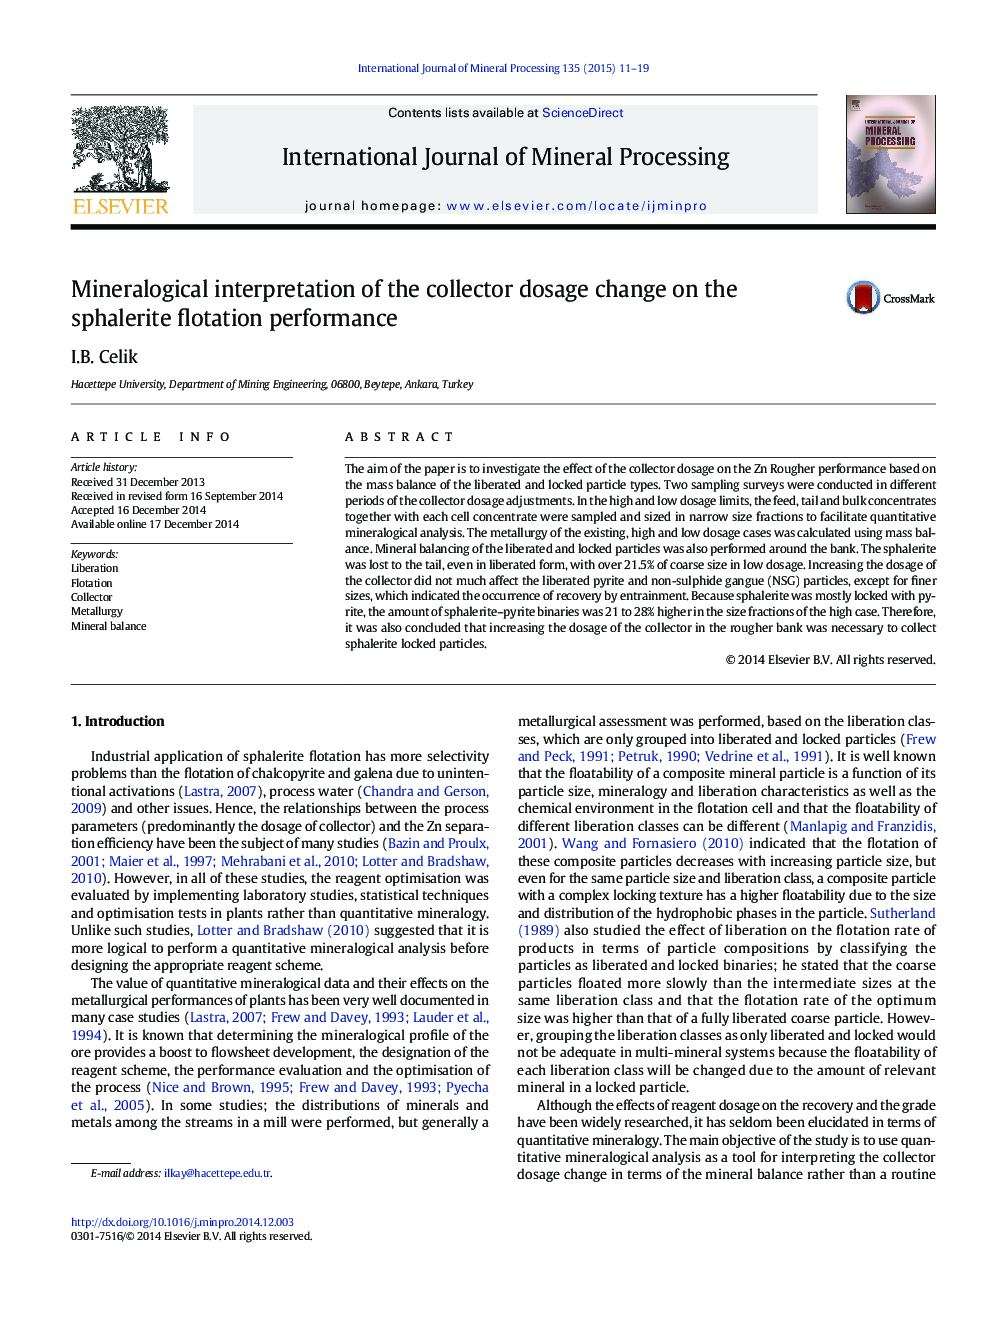 Mineralogical interpretation of the collector dosage change on the sphalerite flotation performance